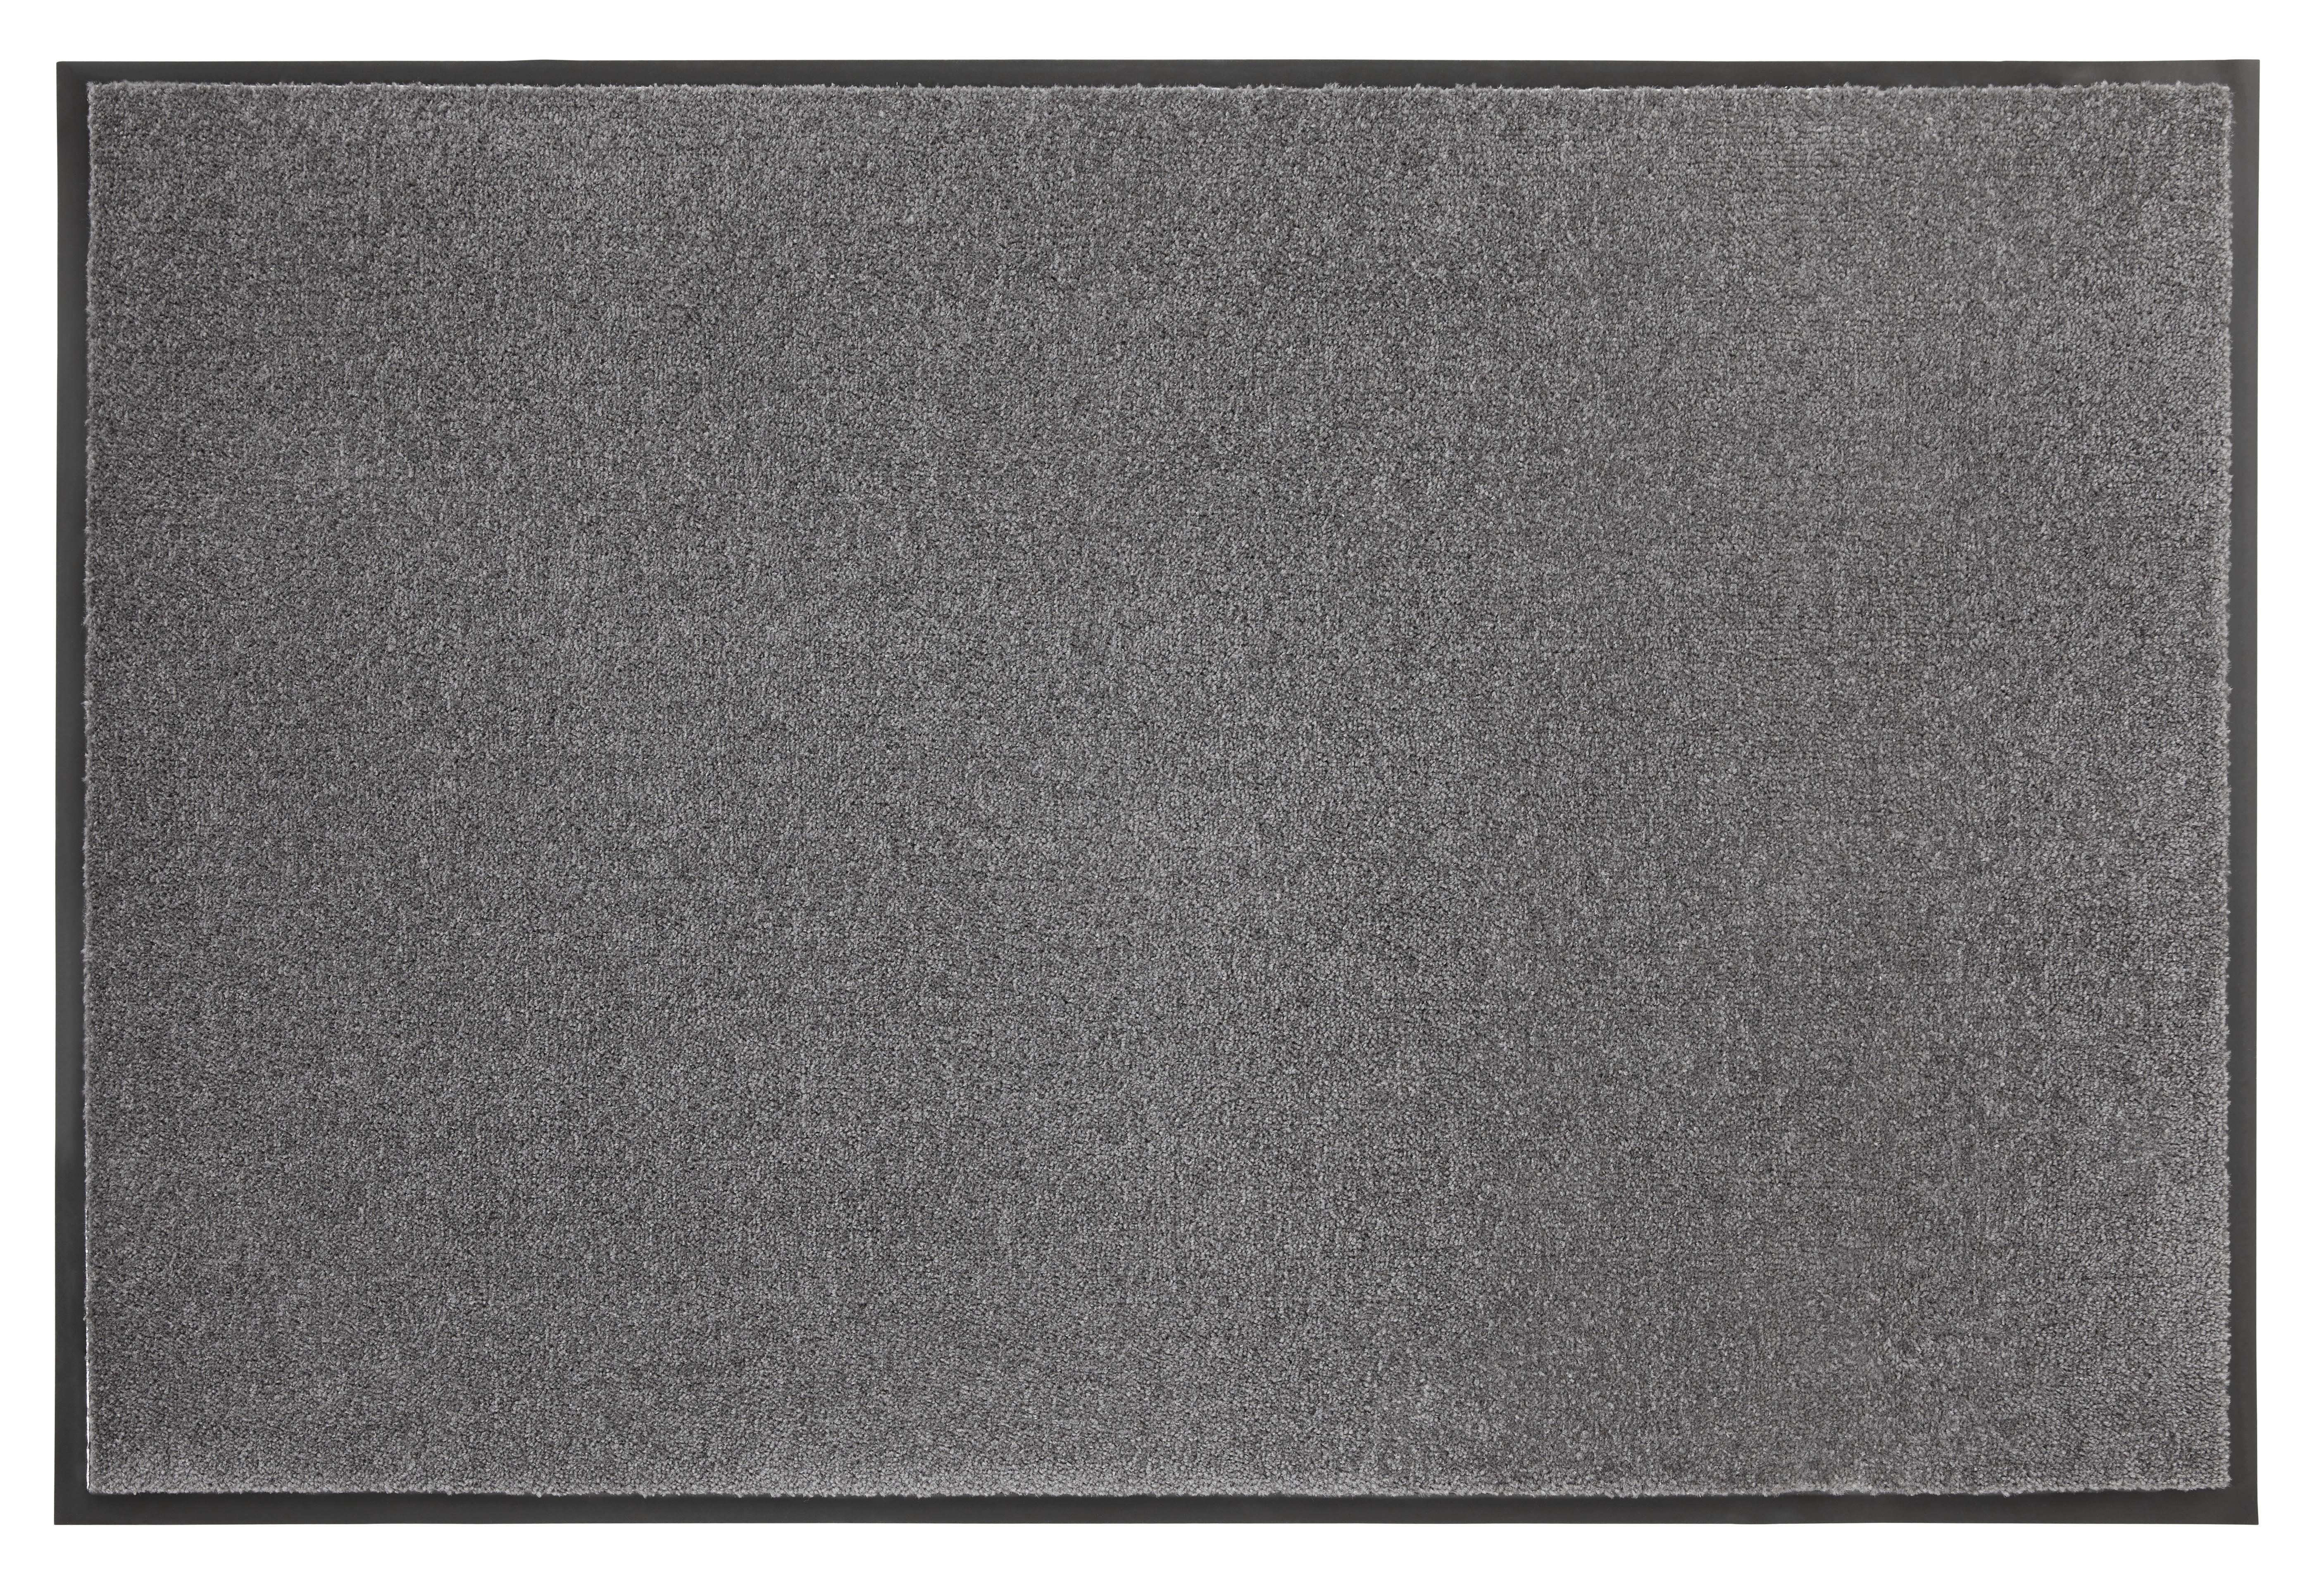 Lábtörlő Eton3 80/120 - Antracit, konvencionális, Textil (80/120cm) - Modern Living